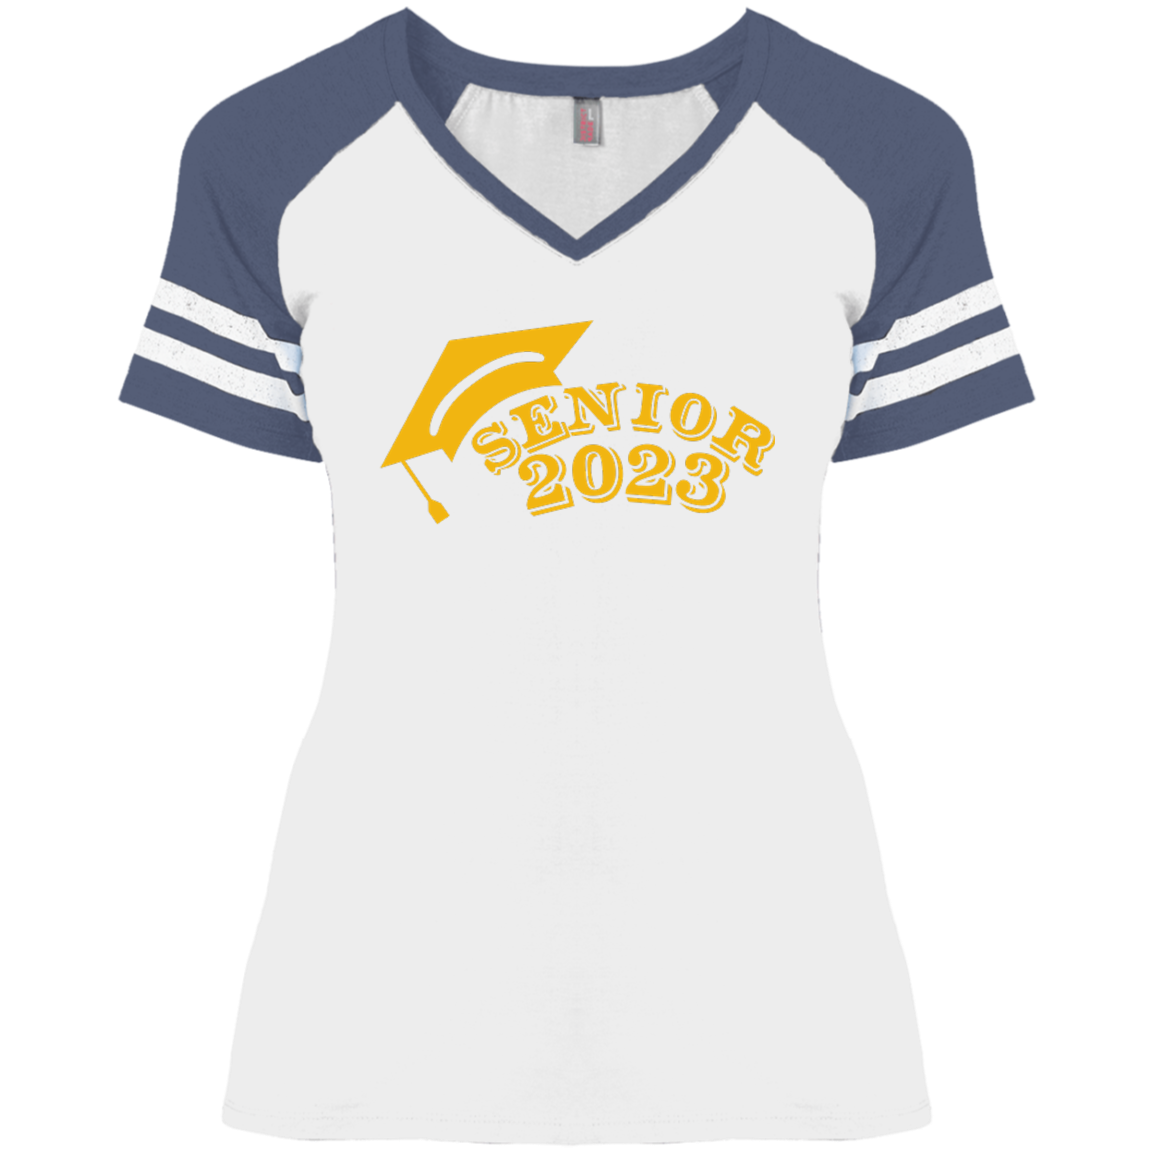 2023 Gold Ladies' Game V-Neck T-Shirt